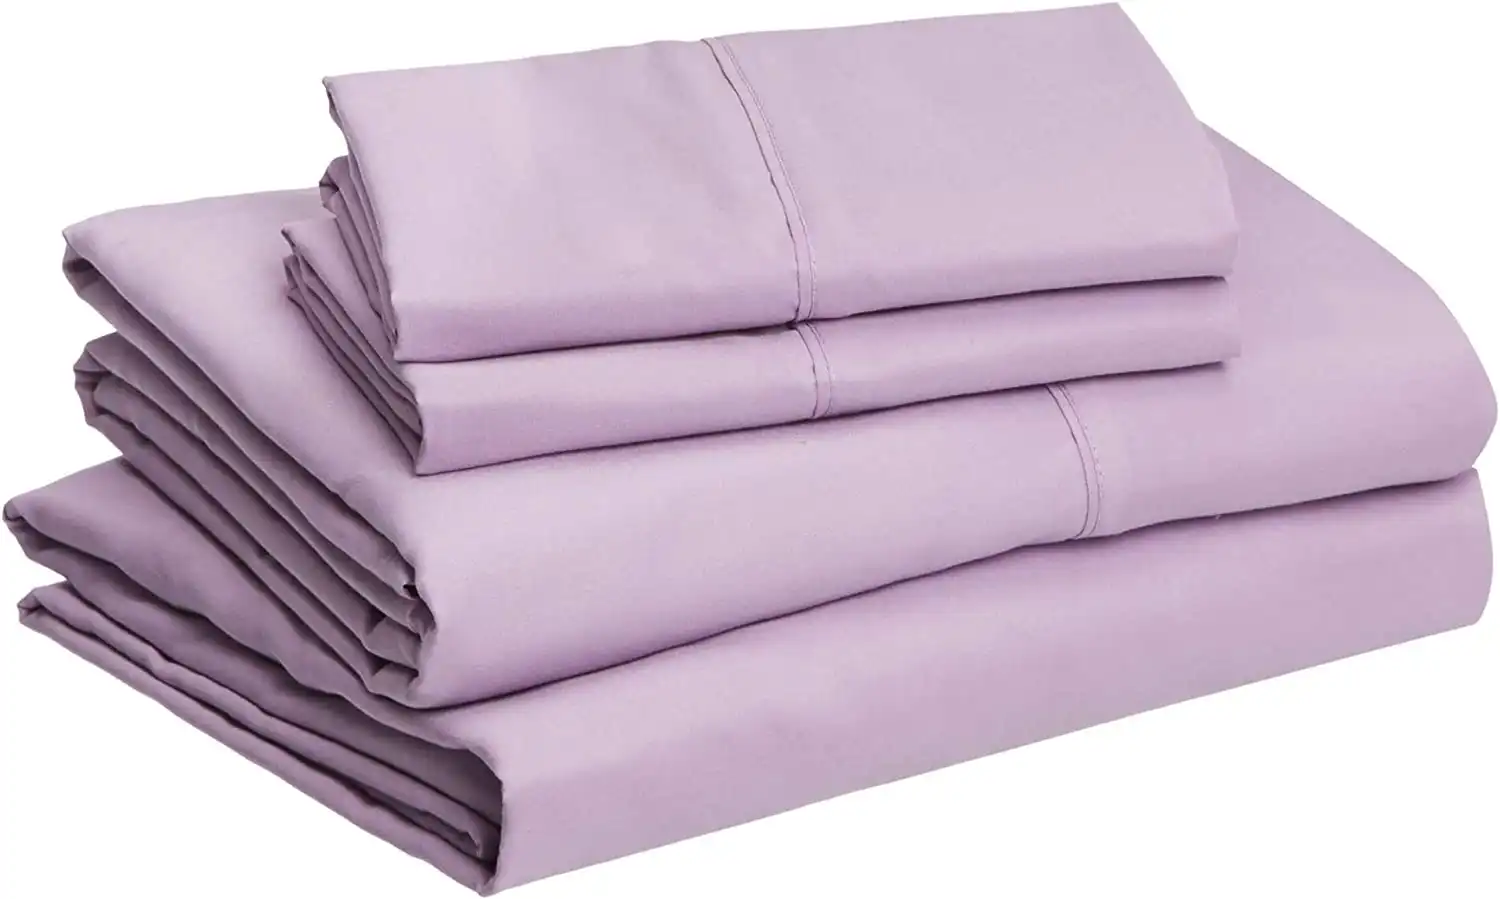 Queen Bed Sheet Set, Lightweight Microfiber, 36 cm Deep Pockets, Frosted Lavender